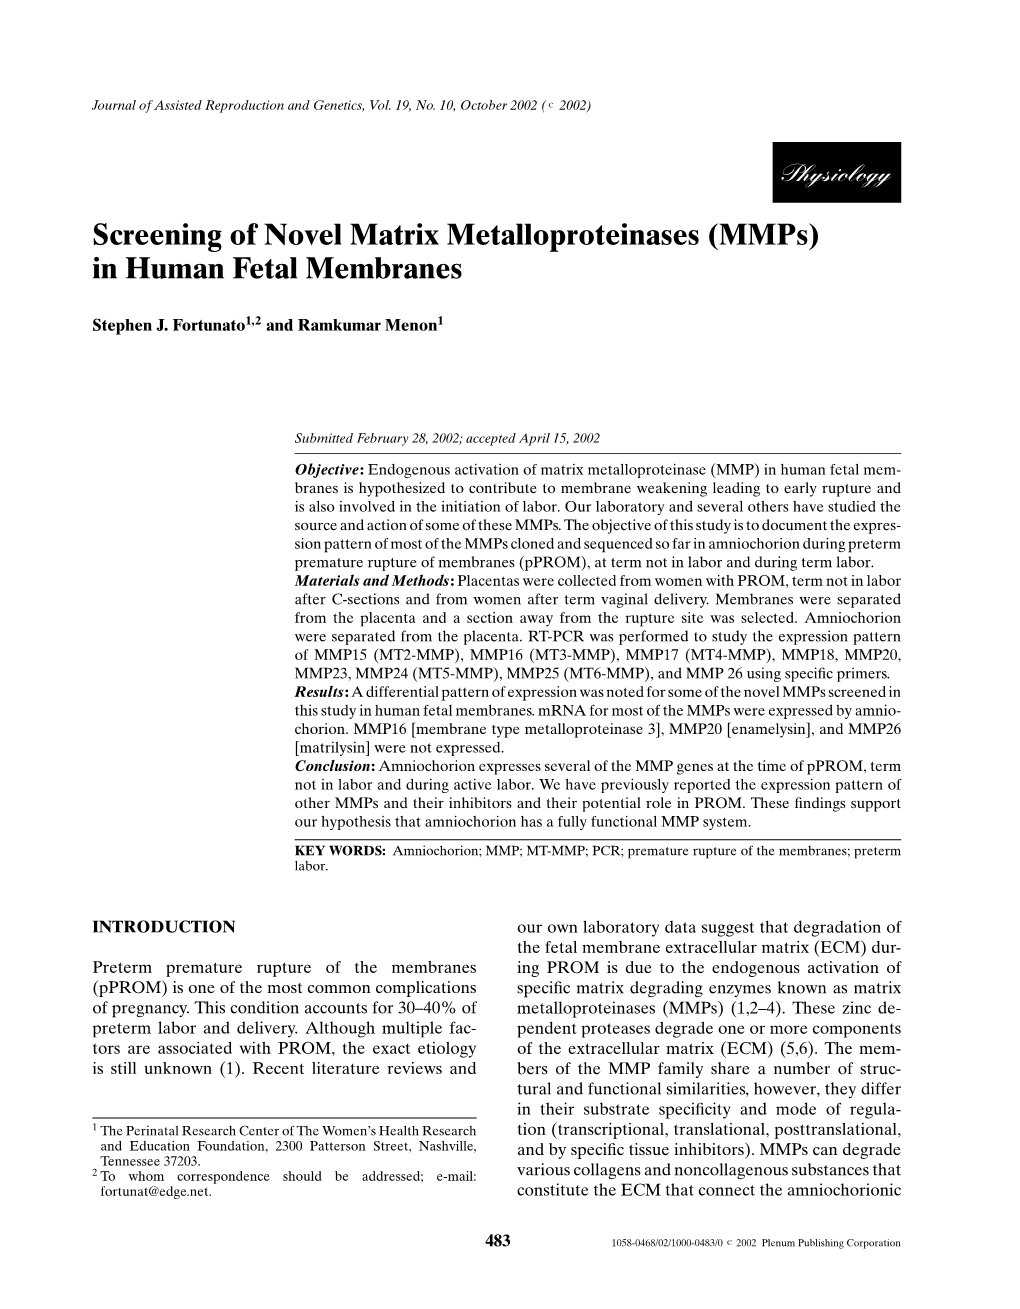 Screening of Novel Matrix Metalloproteinases (Mmps) in Human Fetal Membranes